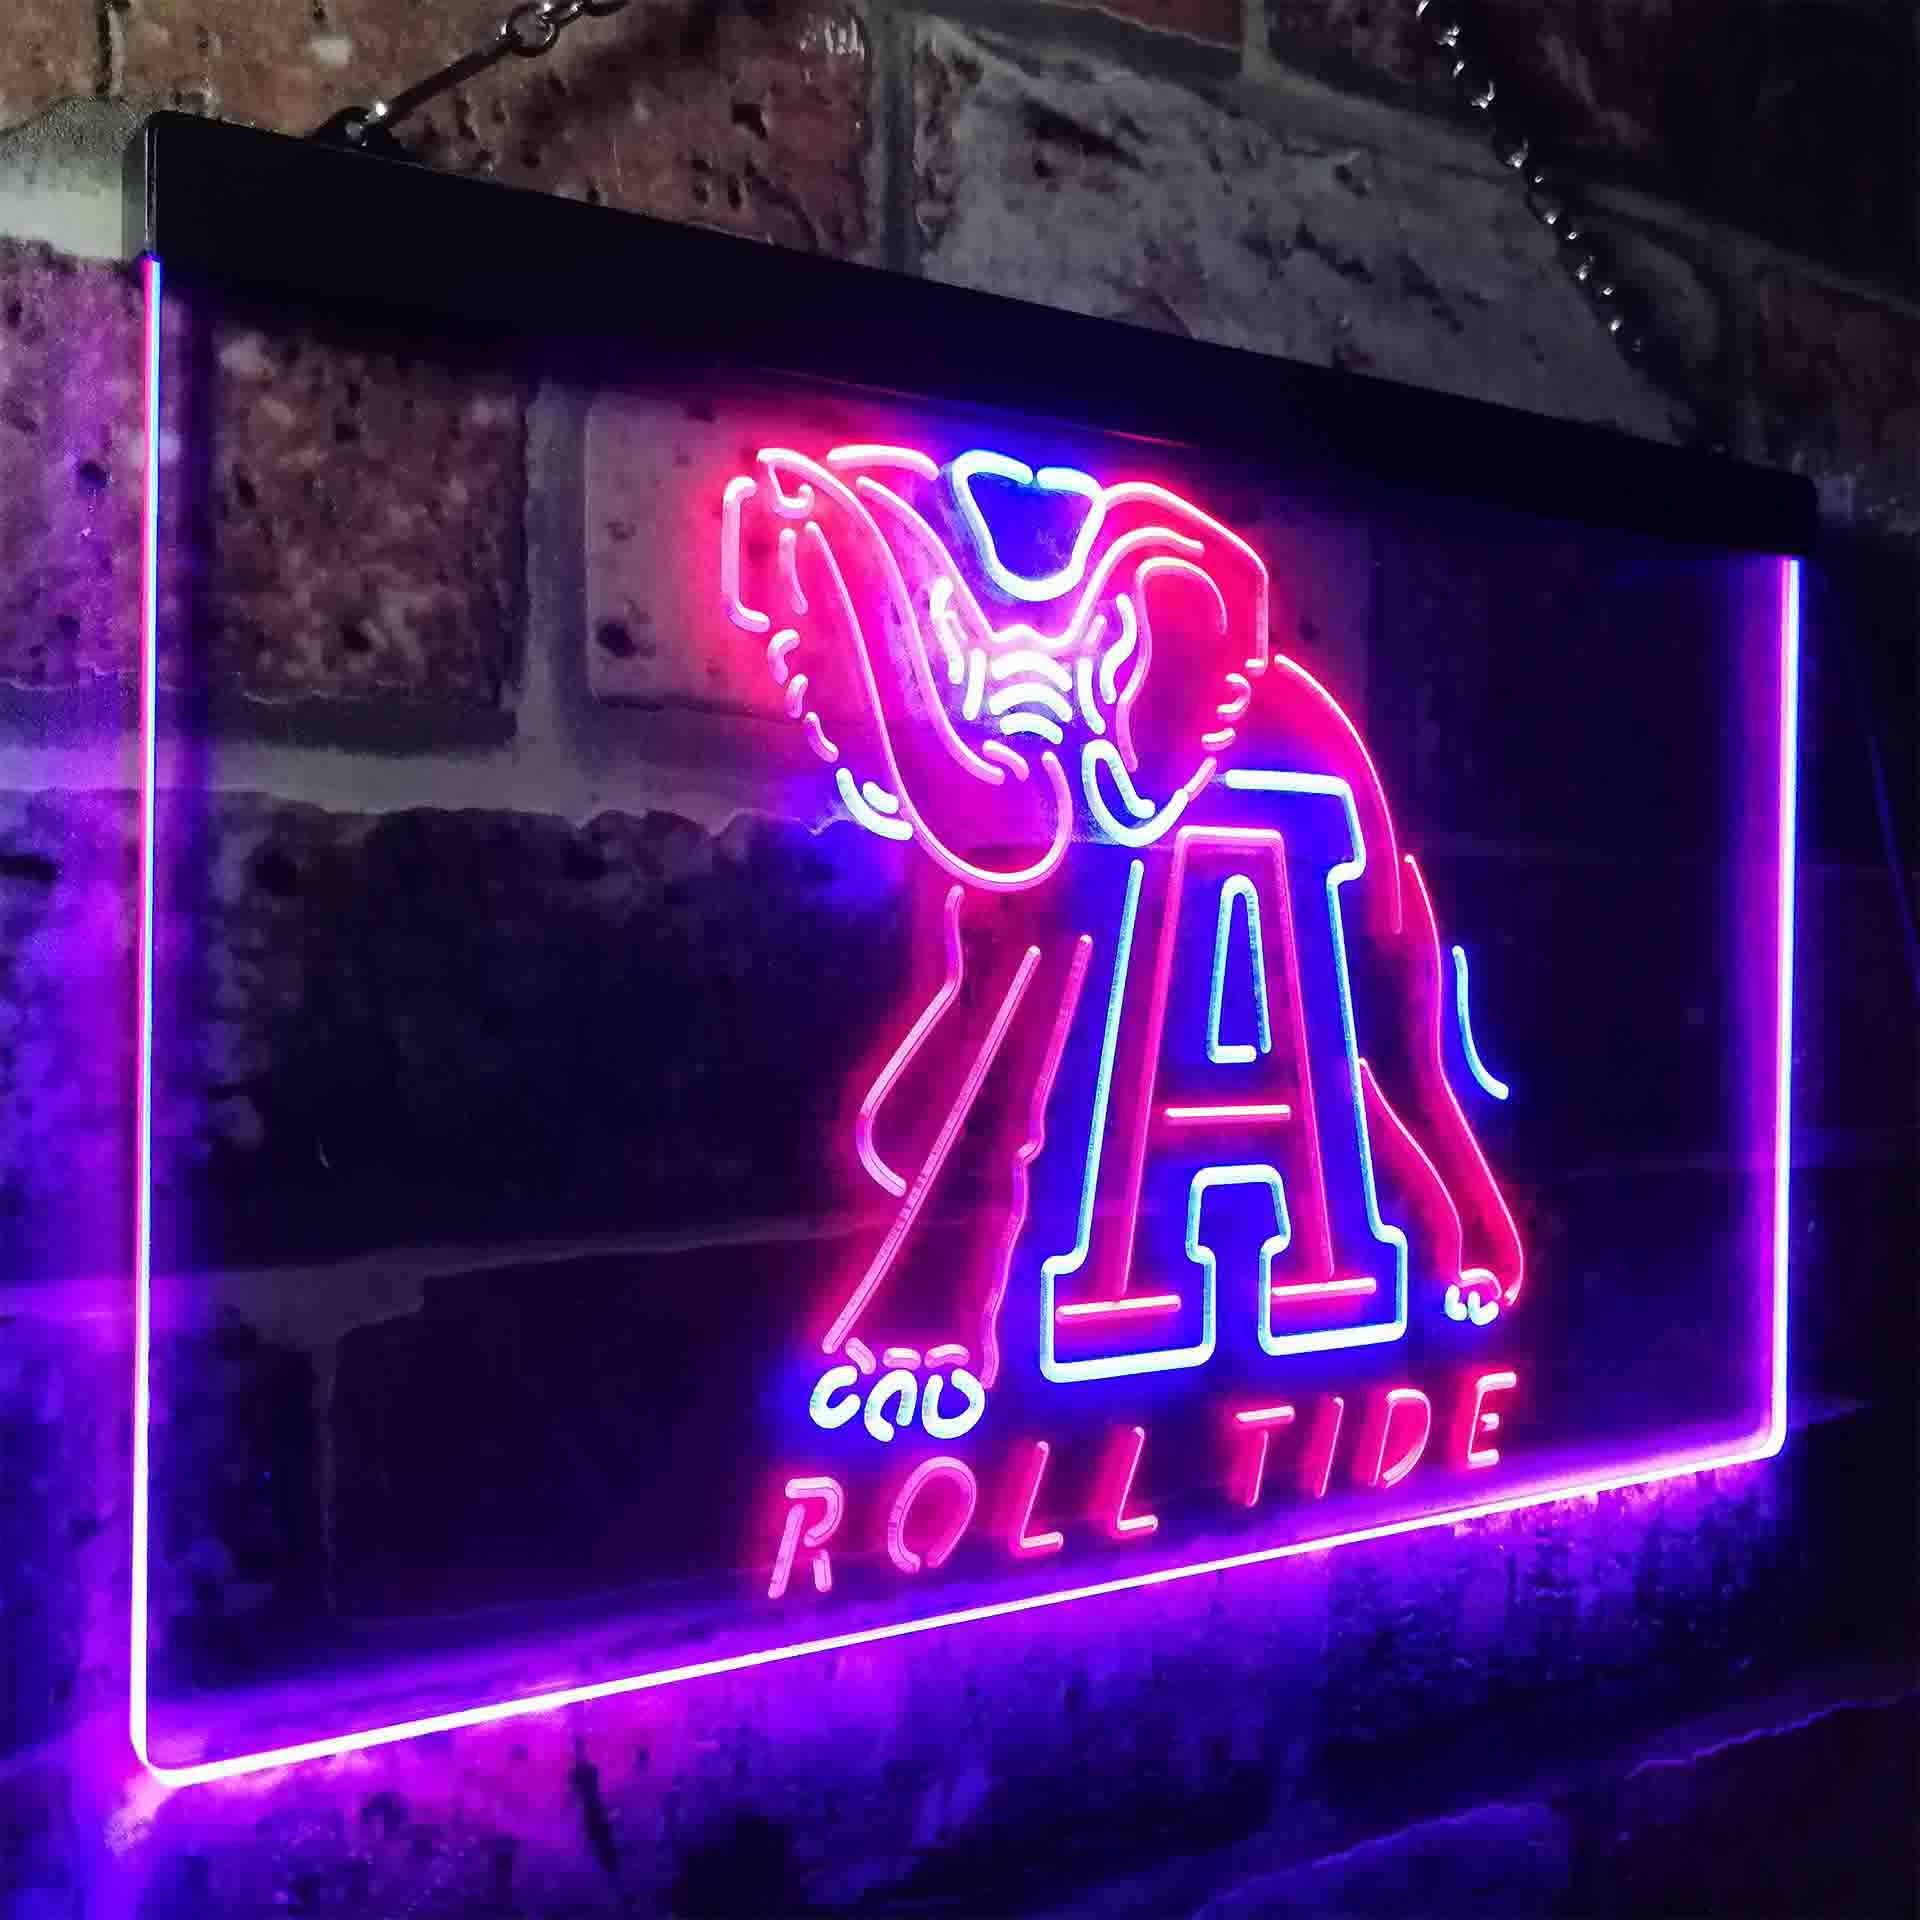 University of Alabama Roll Tide Club LED Neon Sign